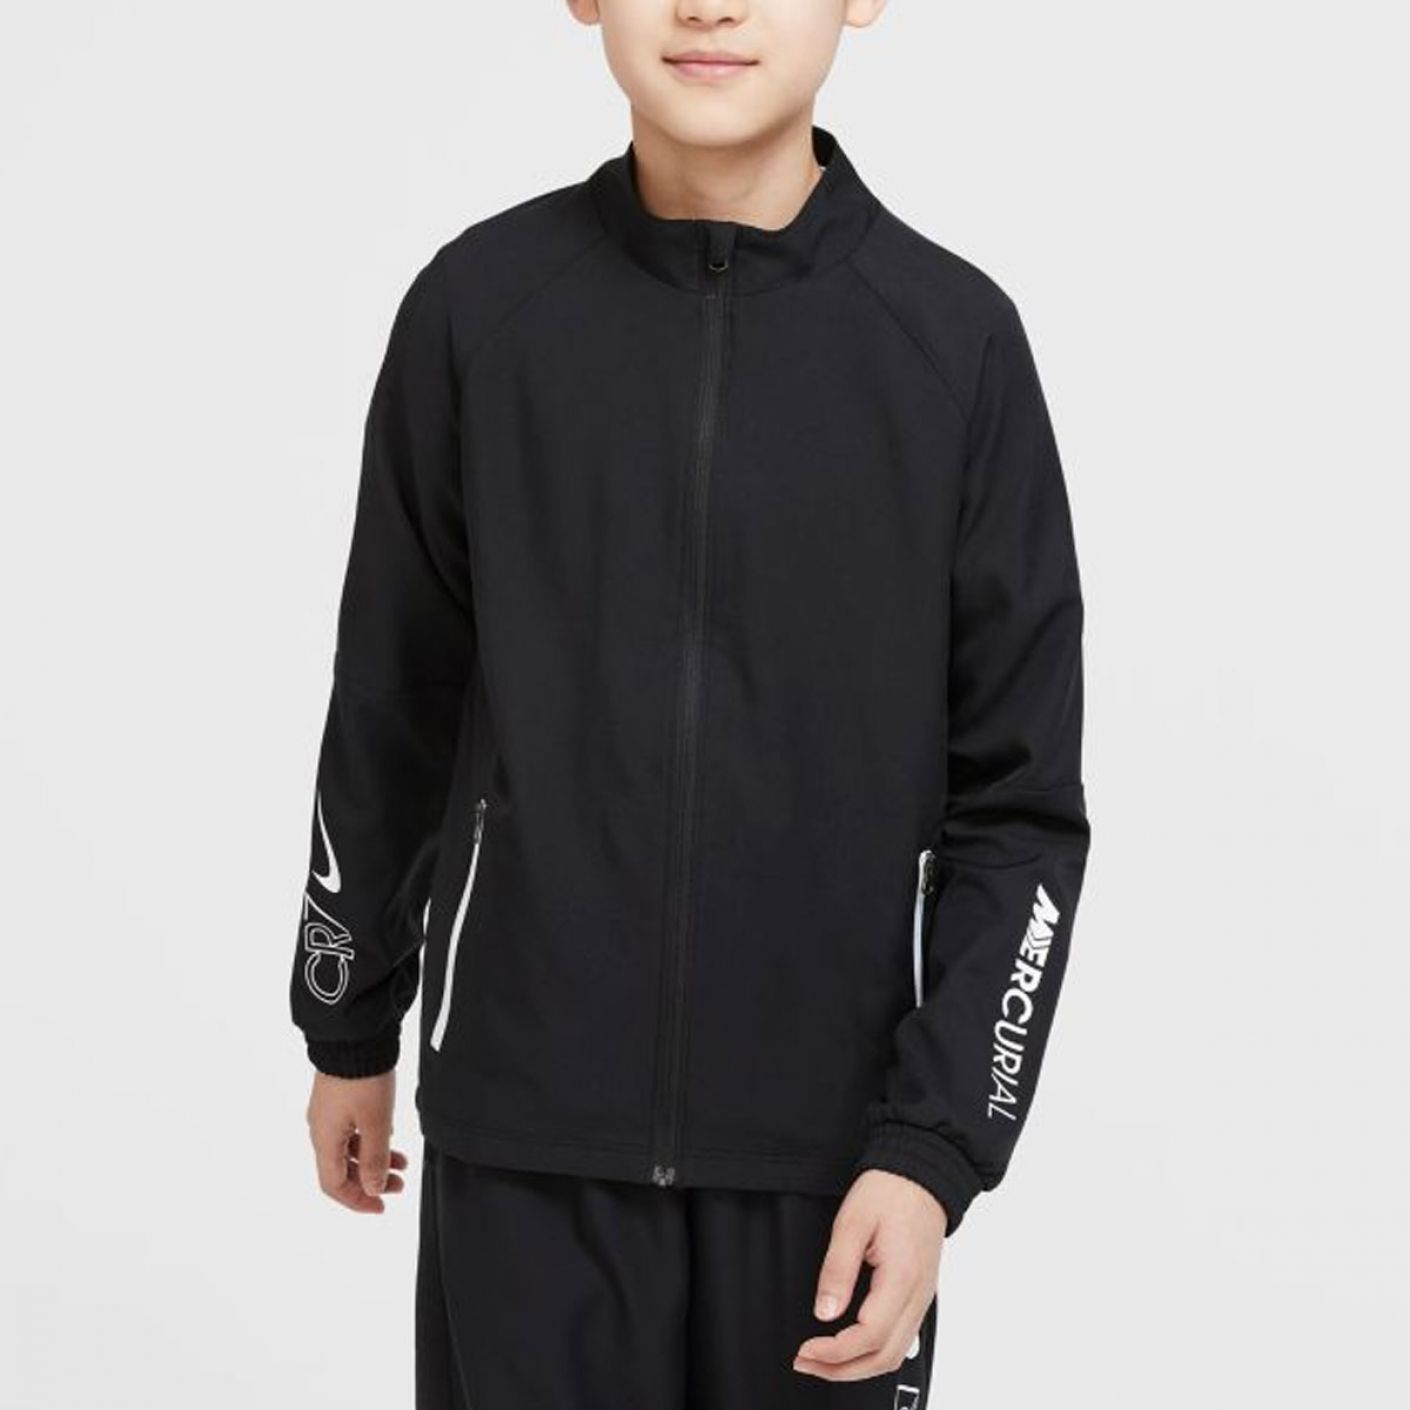 Nike Cr7 Football Suit Black for Kids